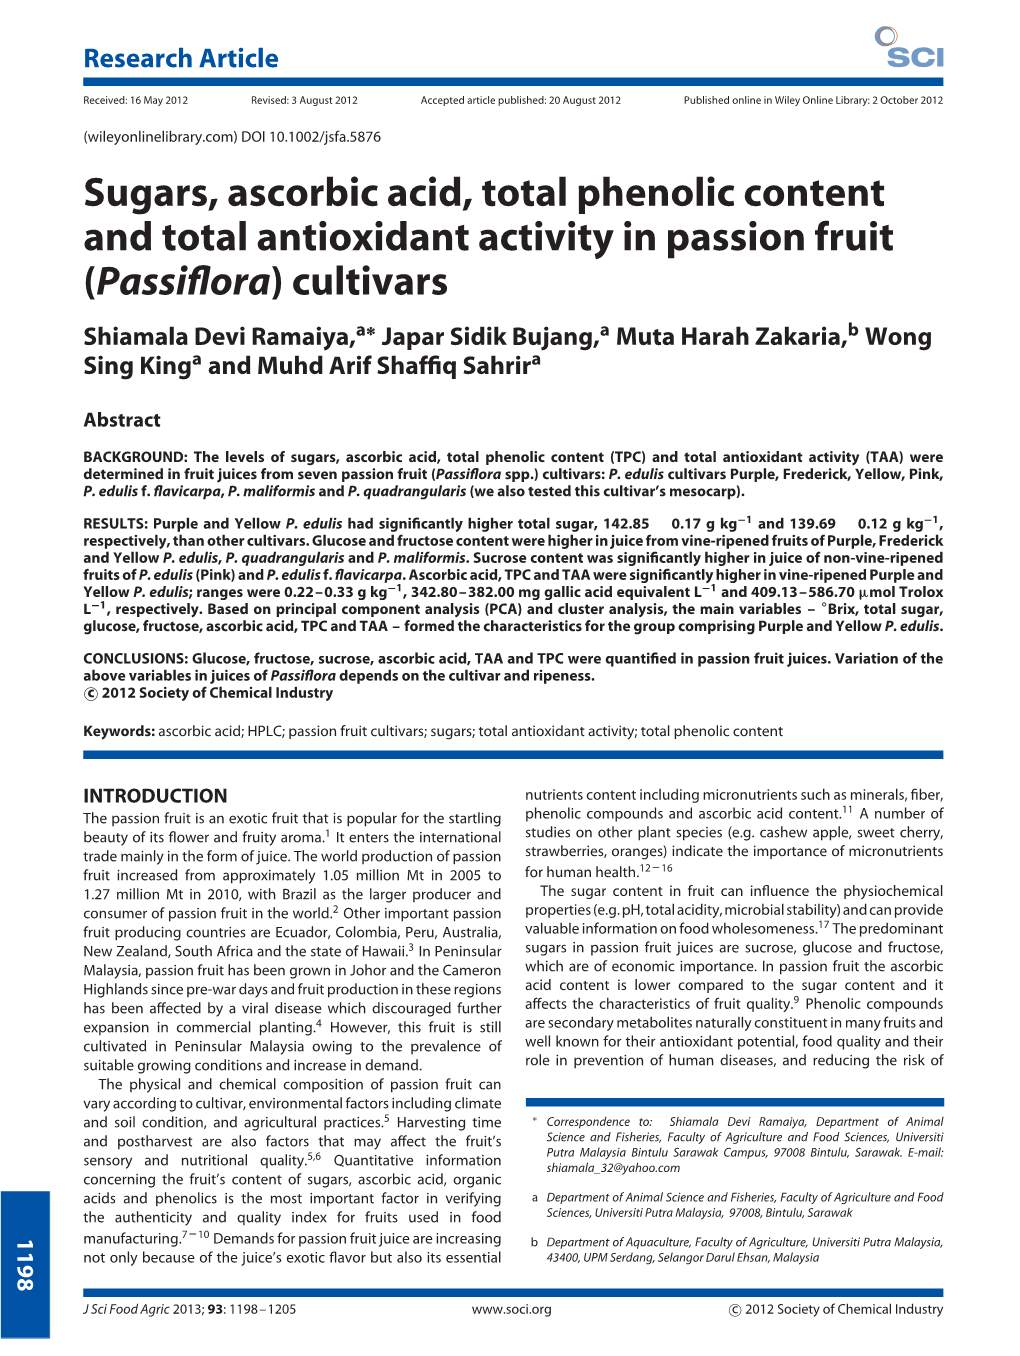 Sugars, Ascorbic Acid, Total Phenolic Content and Total Antioxidant Activity